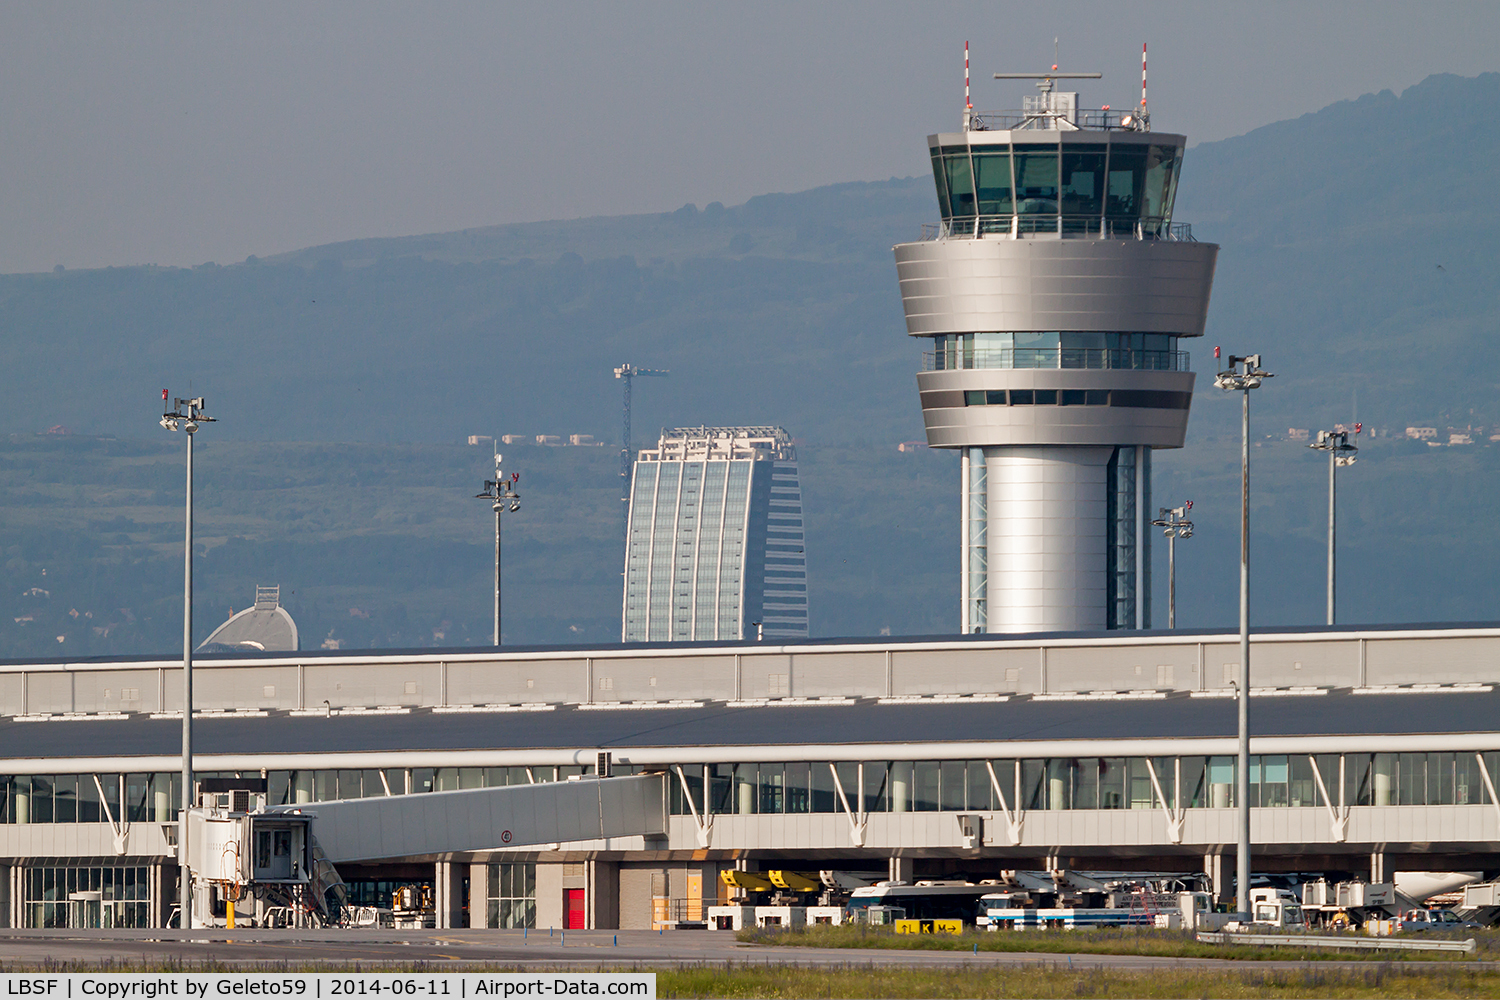 Sofia International Airport (Vrazhdebna), Sofia Bulgaria (LBSF) - ATSA Tower 